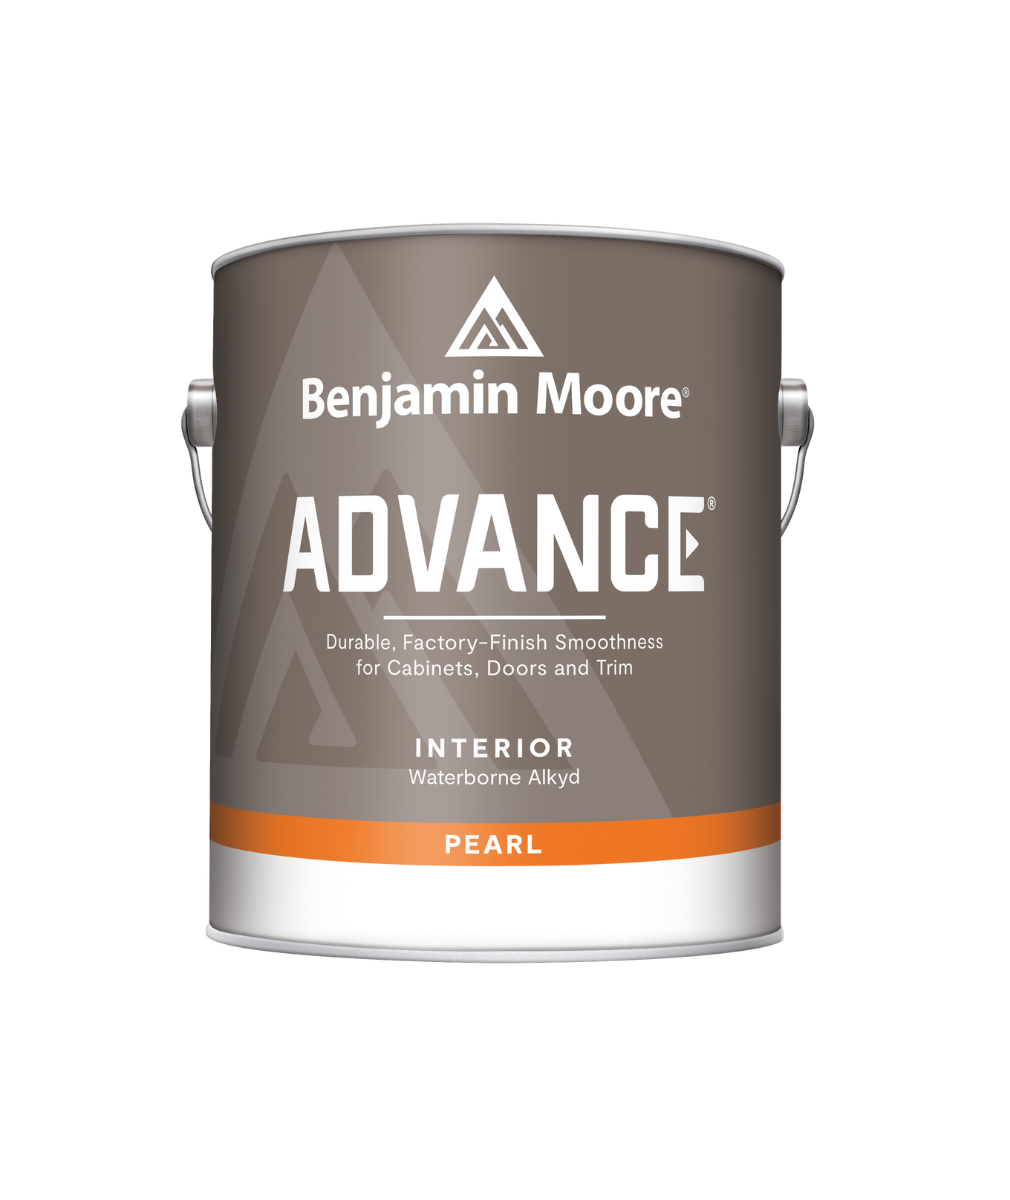 Benjamin Moore Advance Satin Paint available at Catalina Paints.